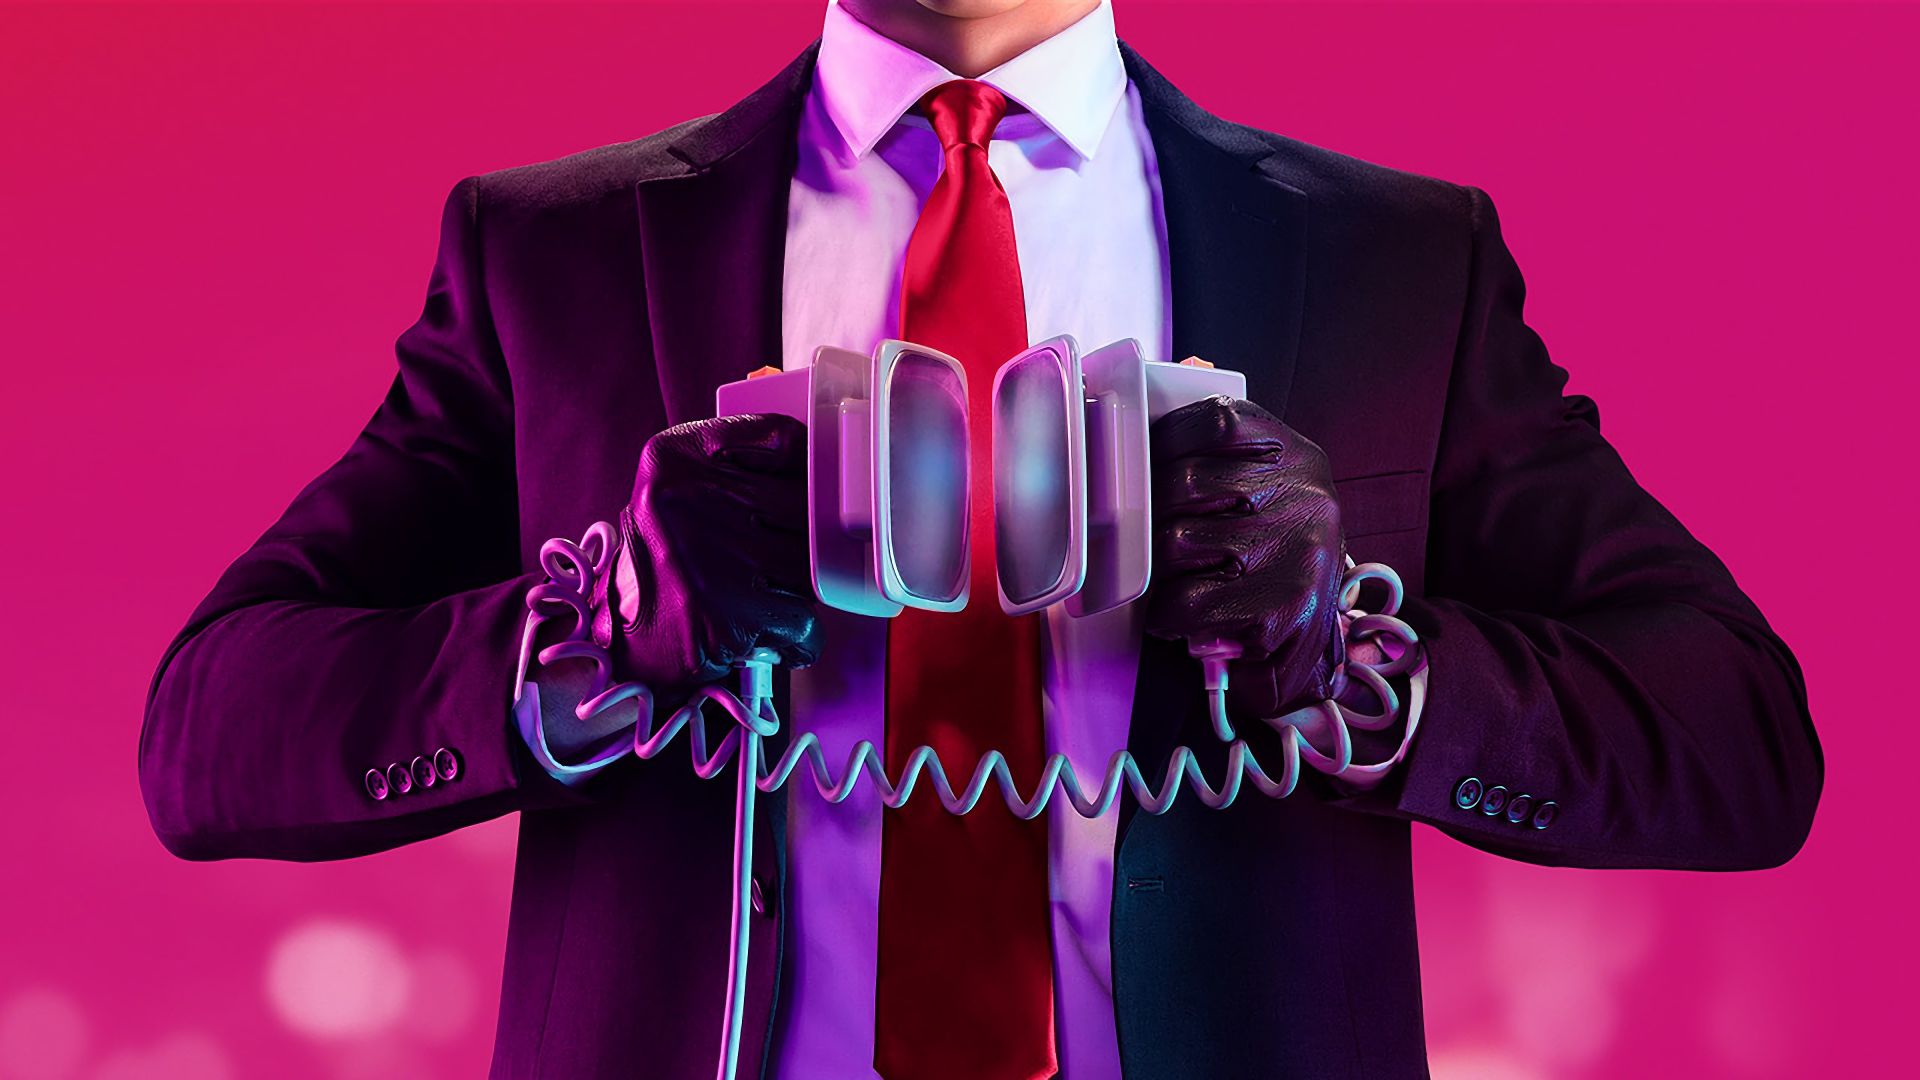 Hitman 2, E3 2018, artwork, poster, 4K (horizontal)